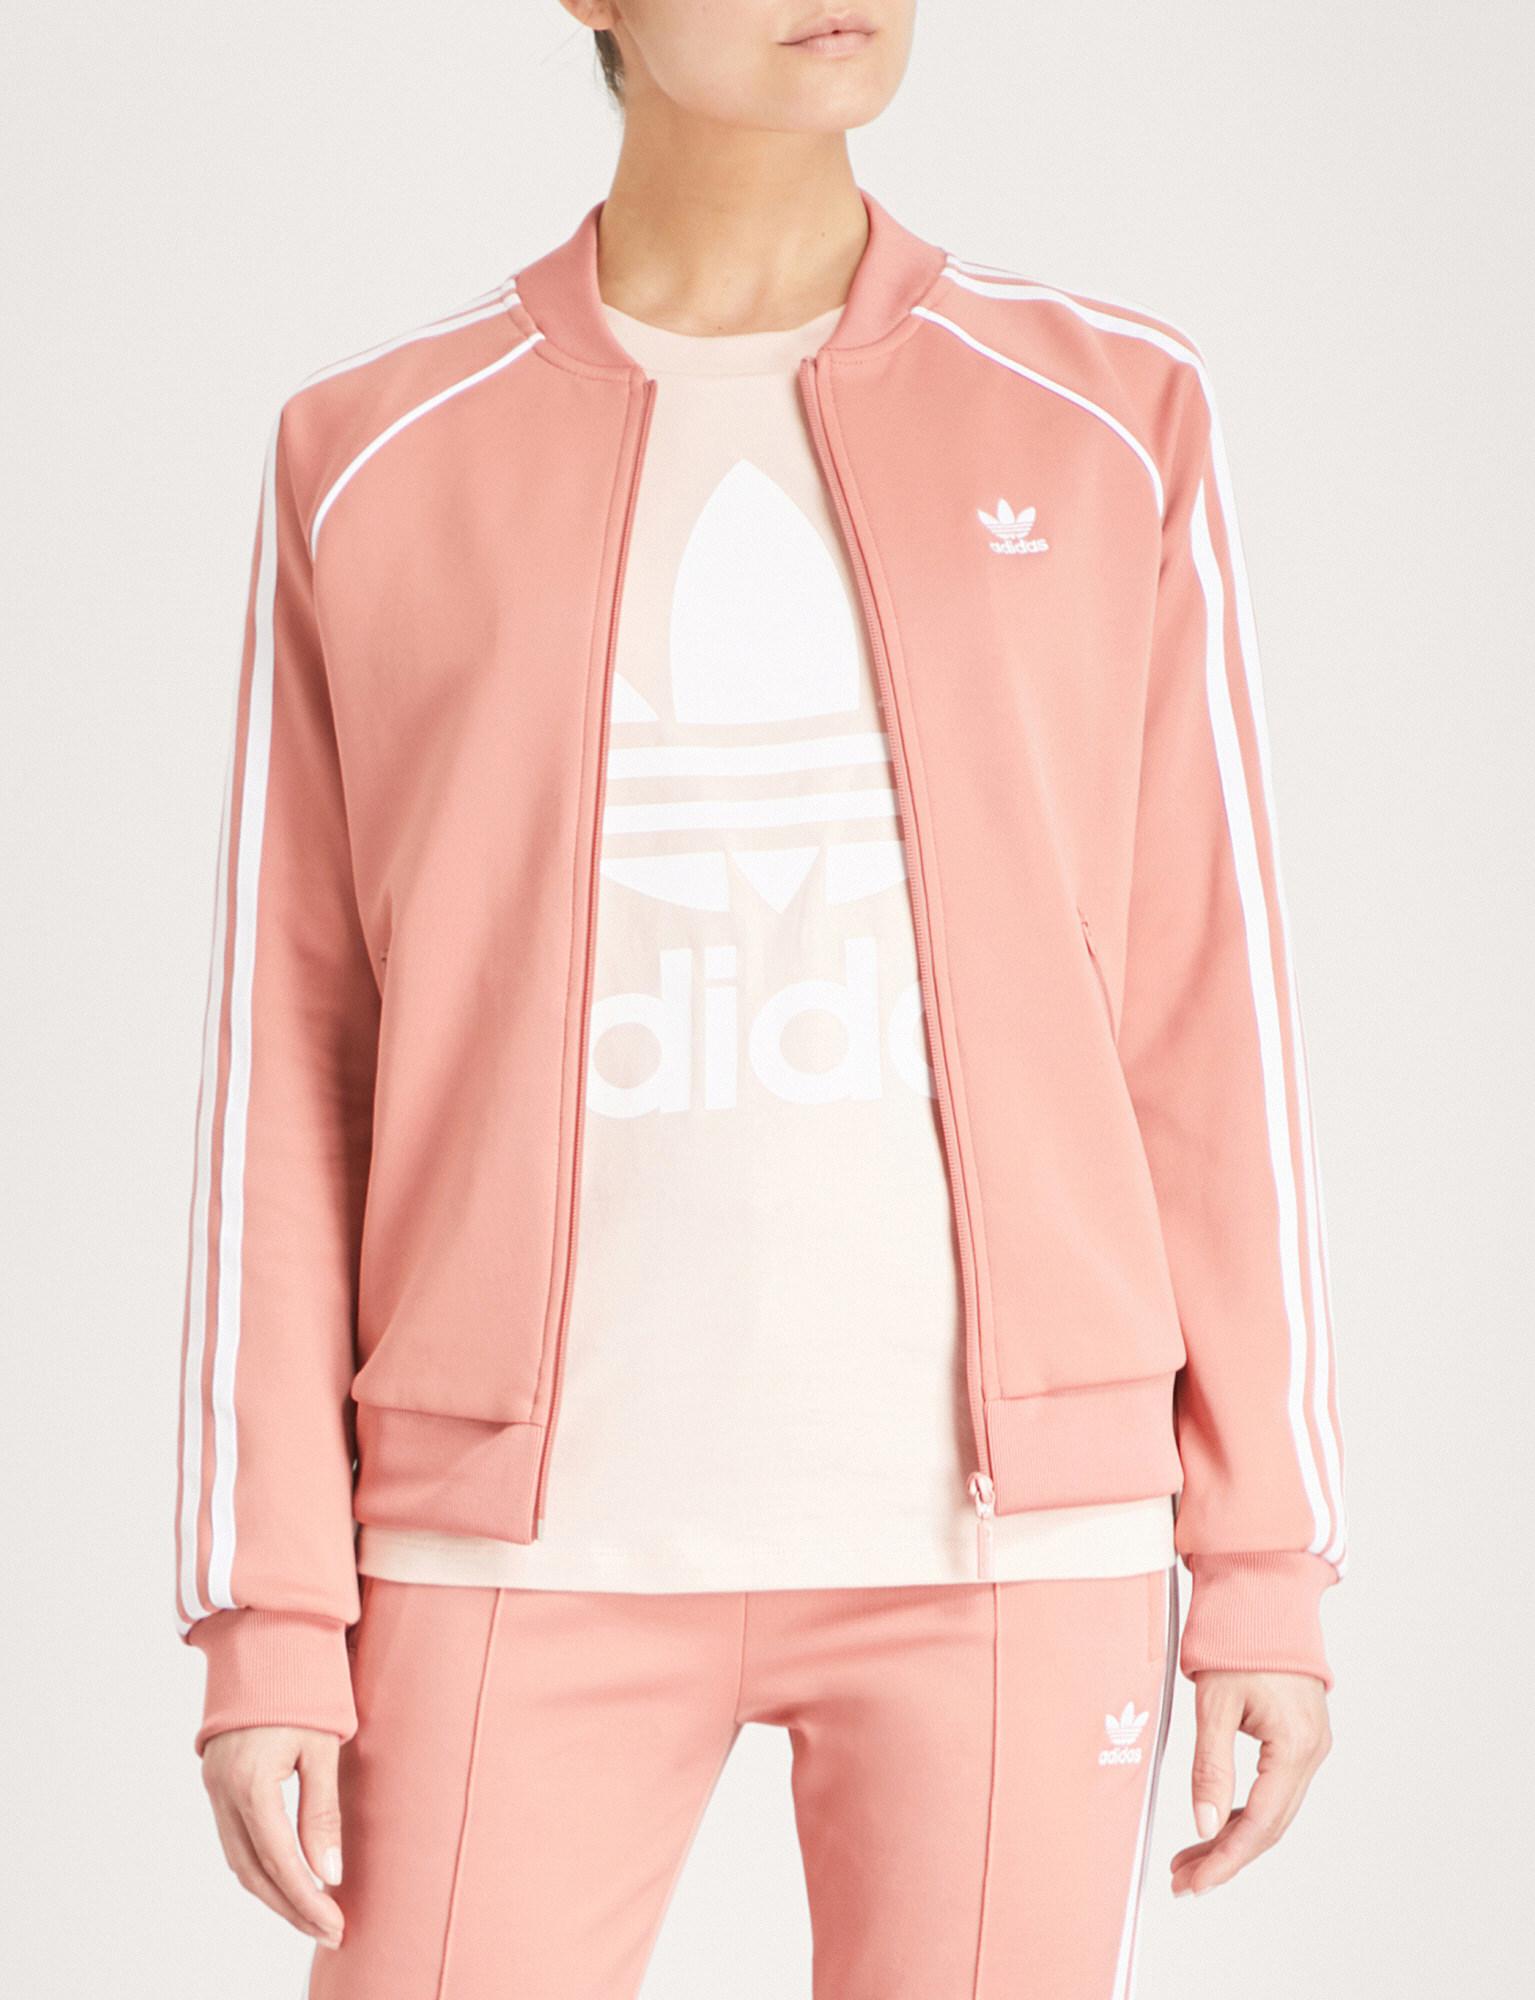 Sst 3-stripes Jersey Jacket in Ash Pink 